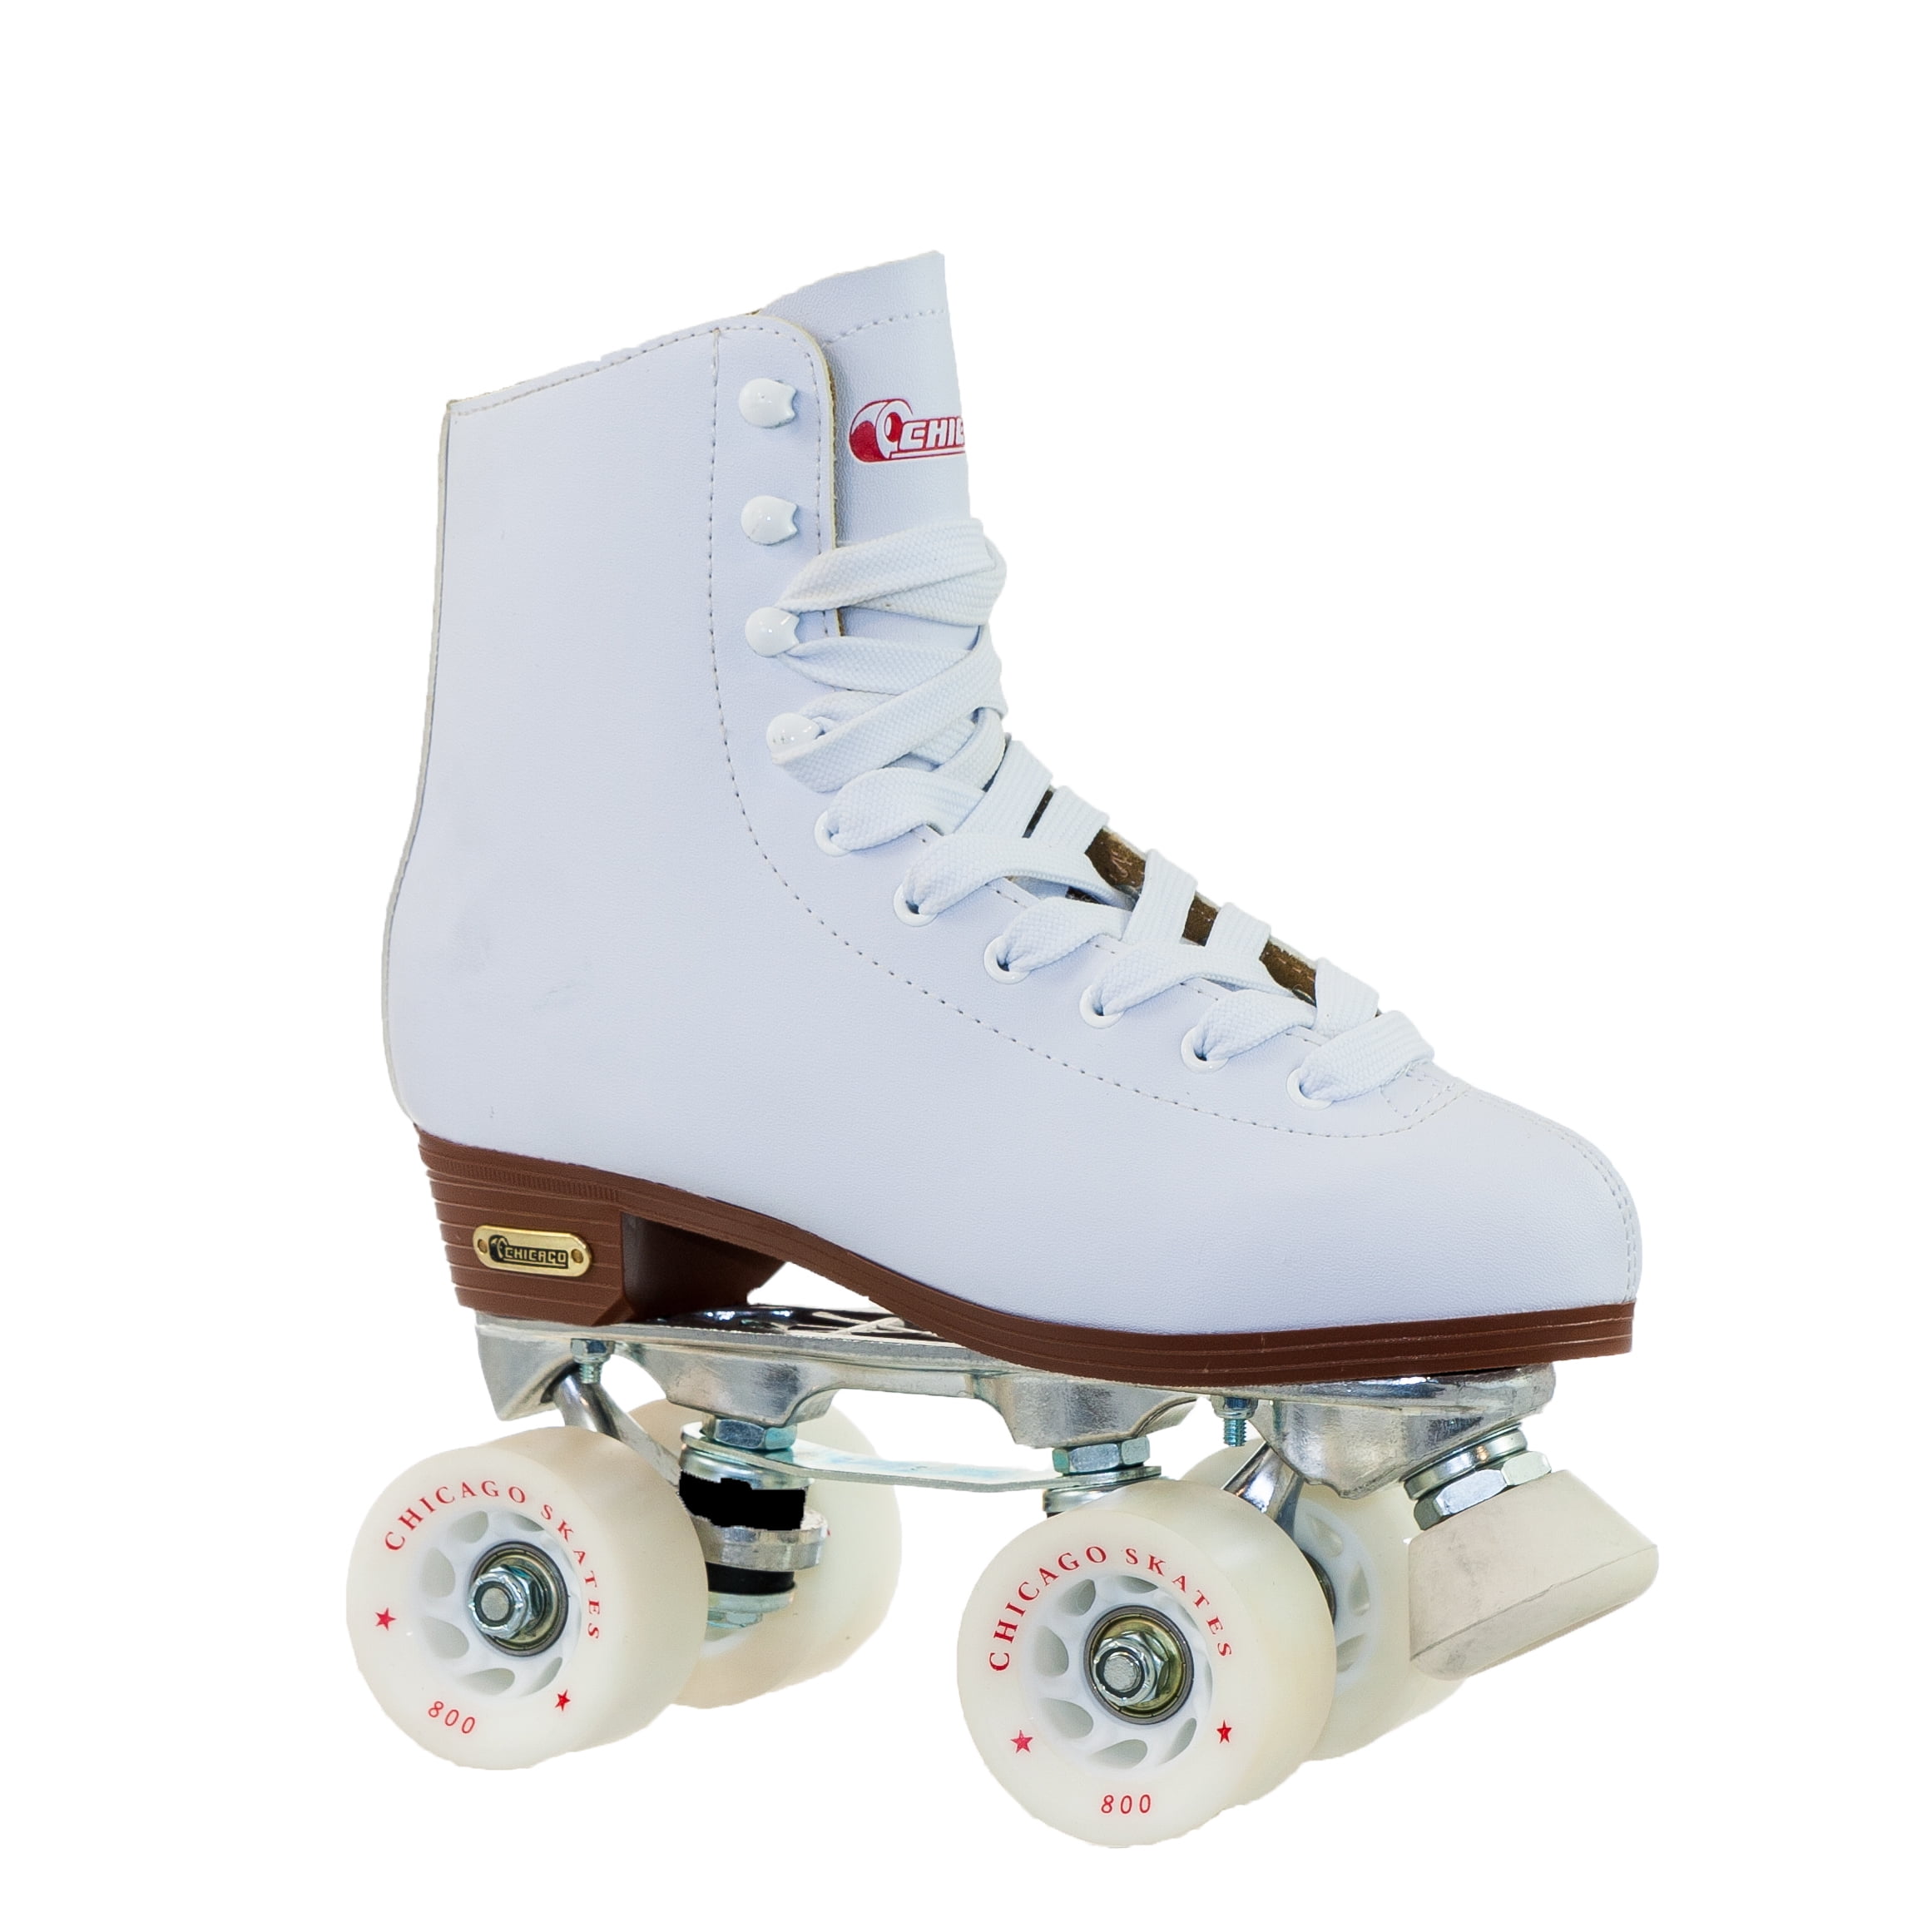 Chicago Ladies Classic Quad Roller Skates US 8 for sale online White 